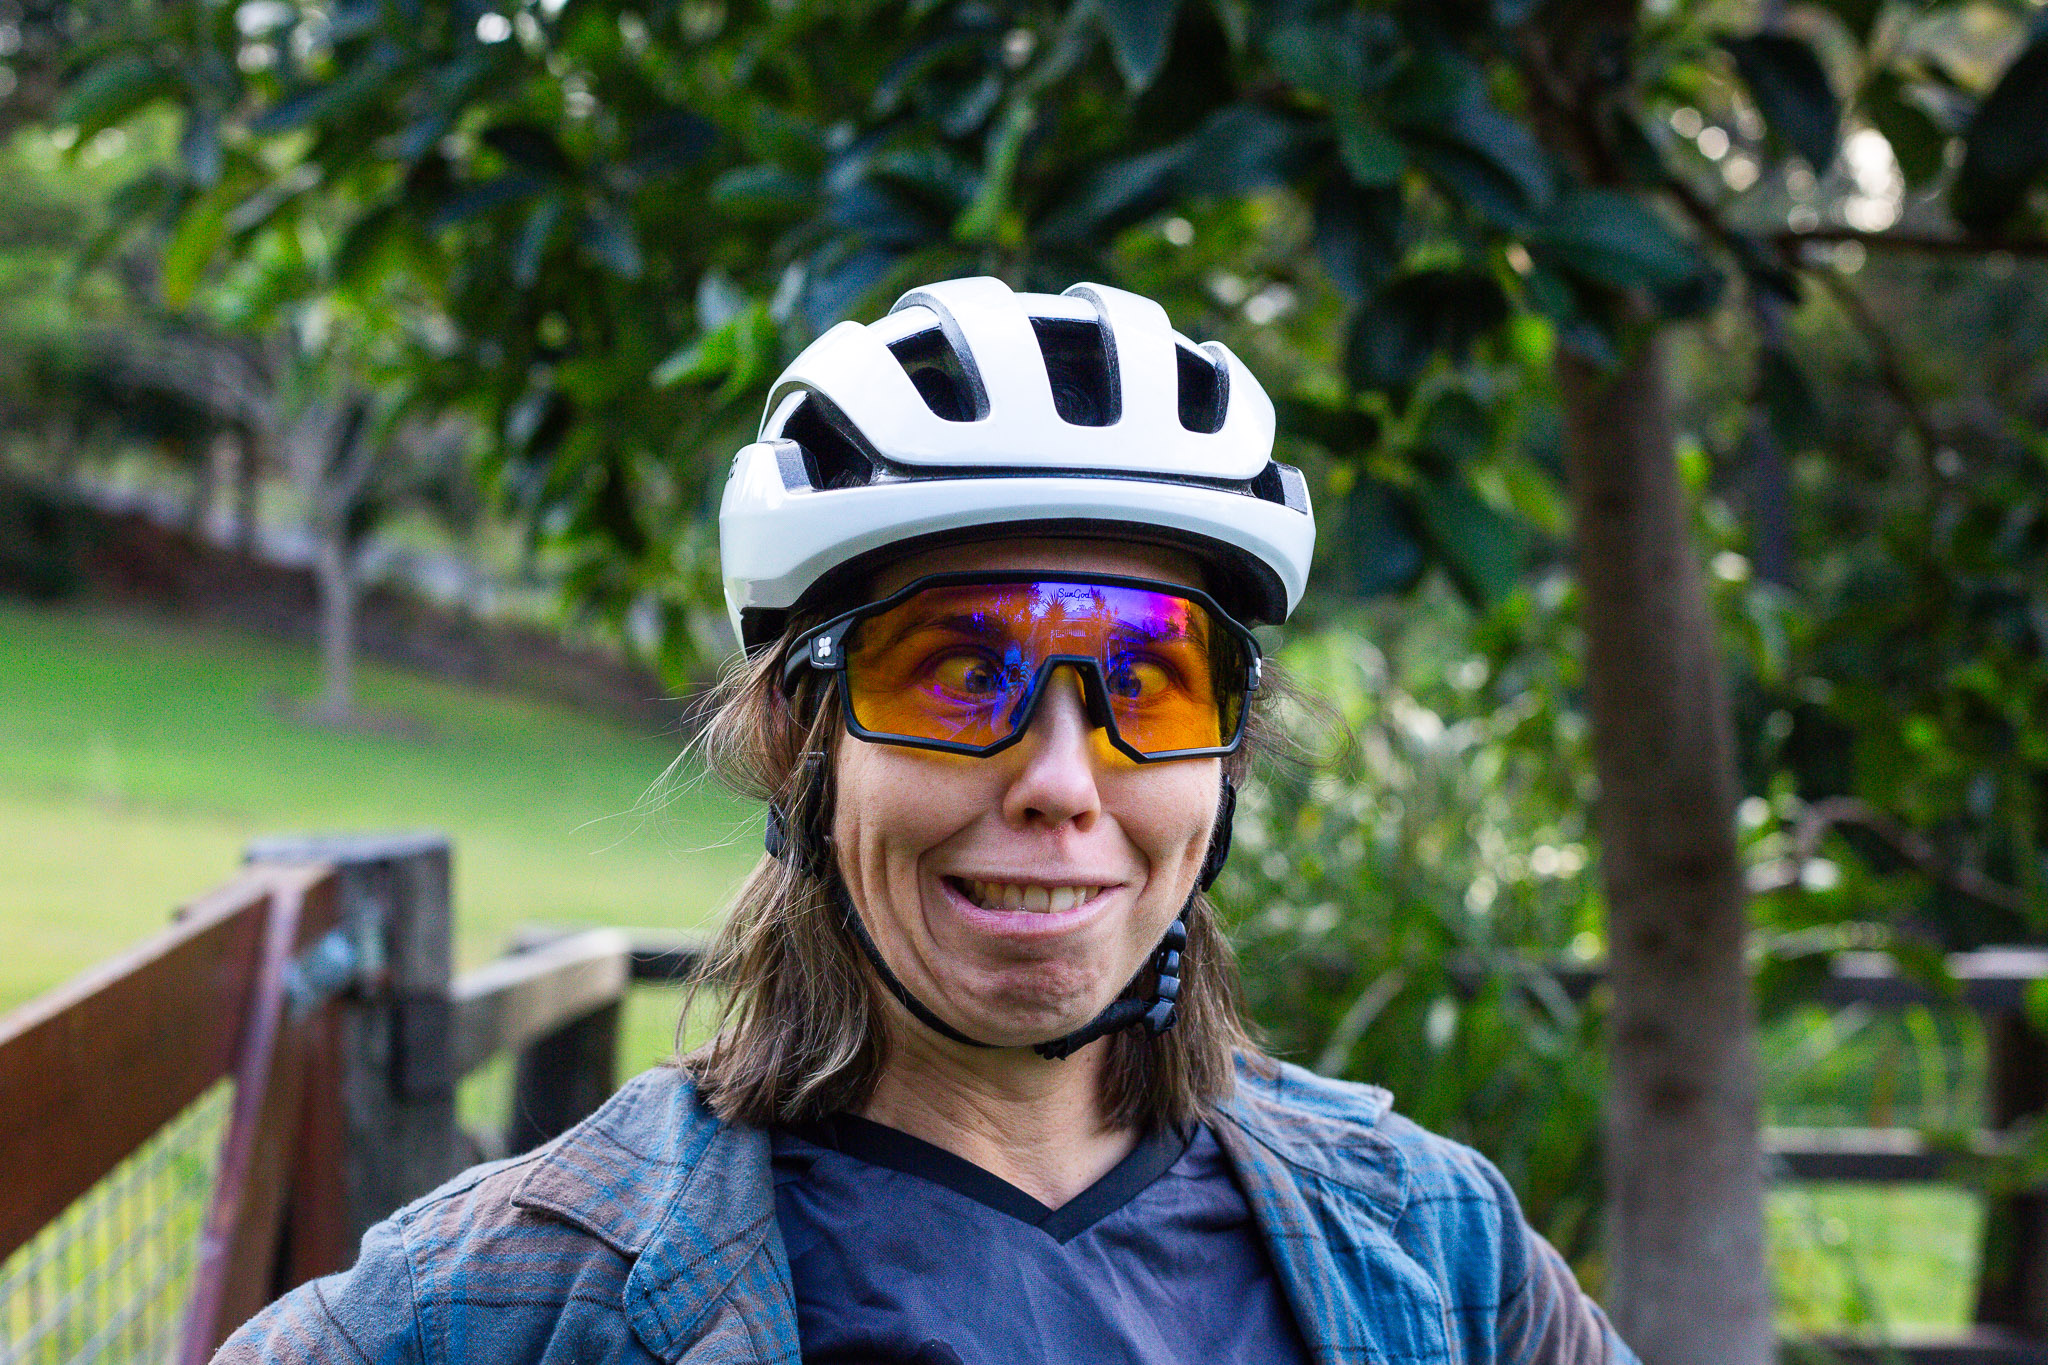 Sunglasses group test for mountain biking